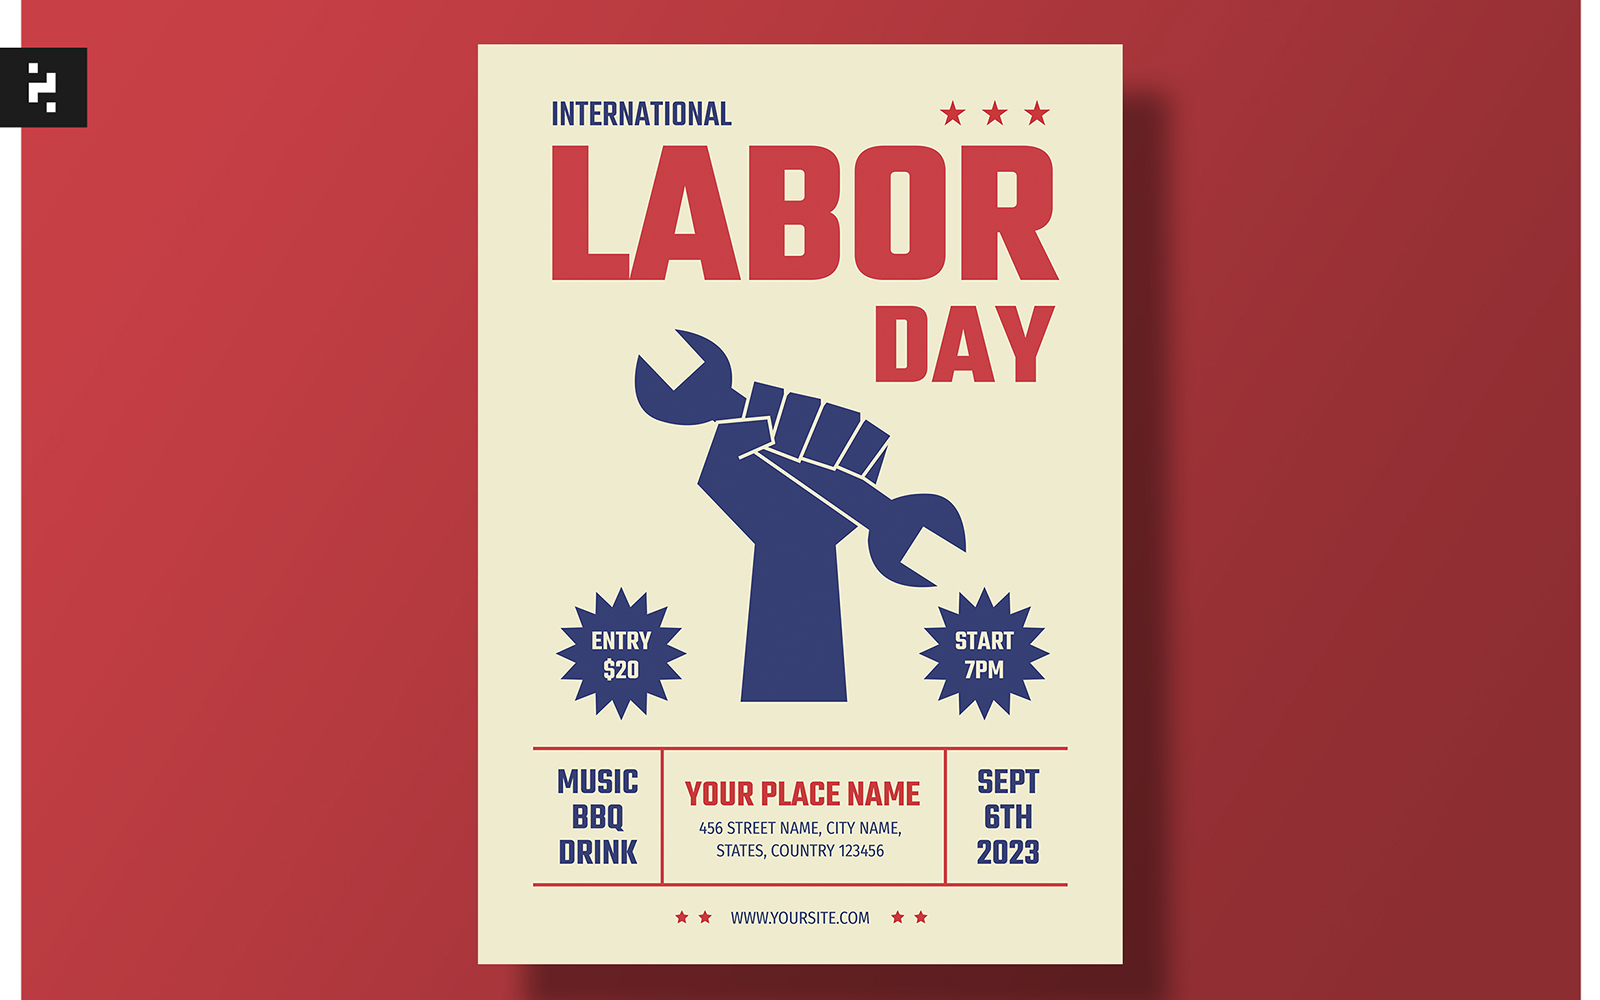 Labor Day Flyer (USA 2 Sept)